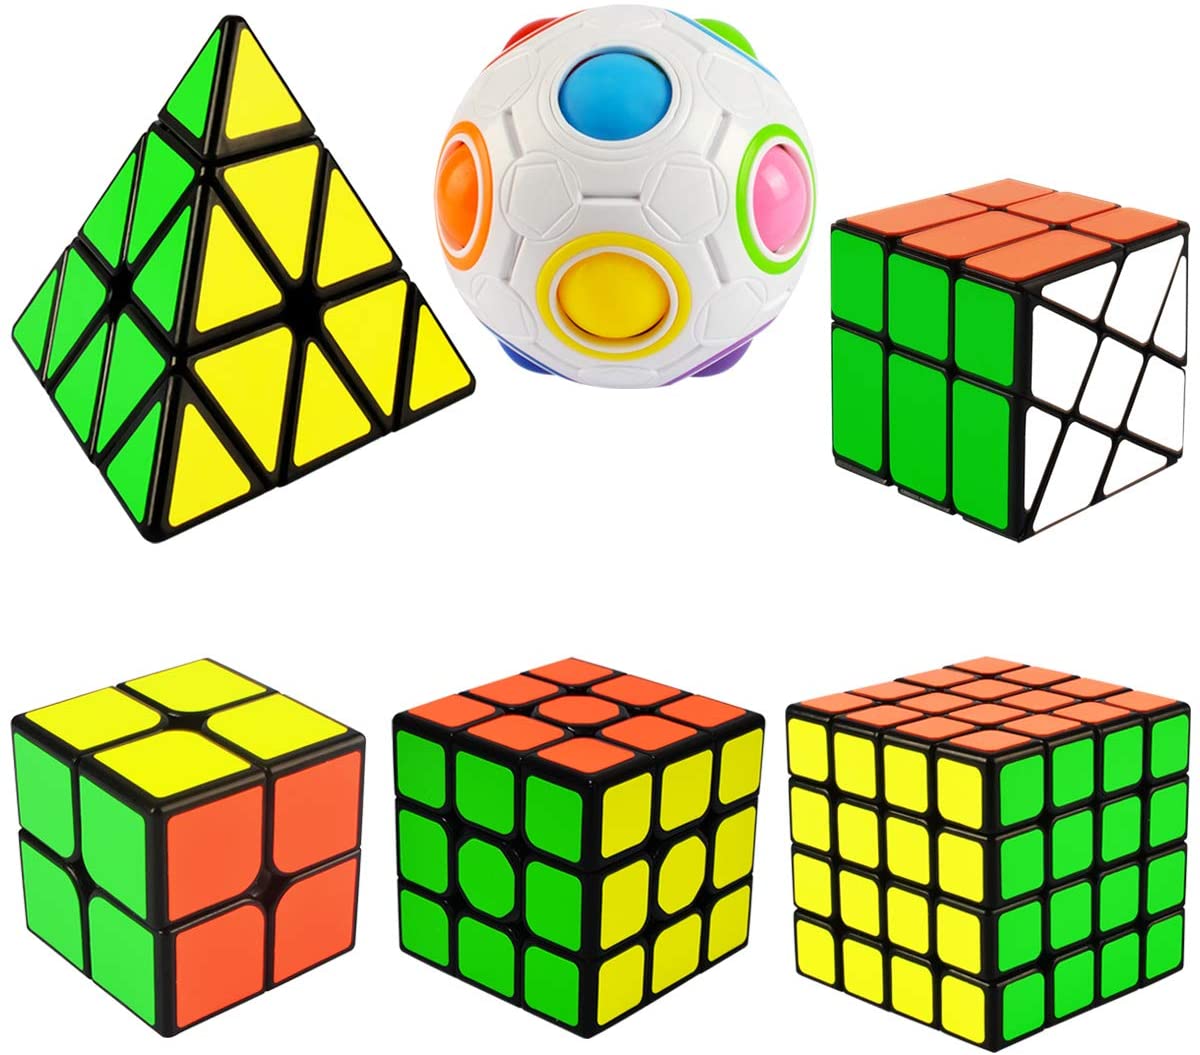 Coolzon Magic Cube Set, 6 Pack Speed Magic Cubes Pyraminx + 2x2 + 3x3 + 4x4  + Magic Rainbow Ball + Fenghuolun Magic Puzzle Cube Toys for Boys Girls 